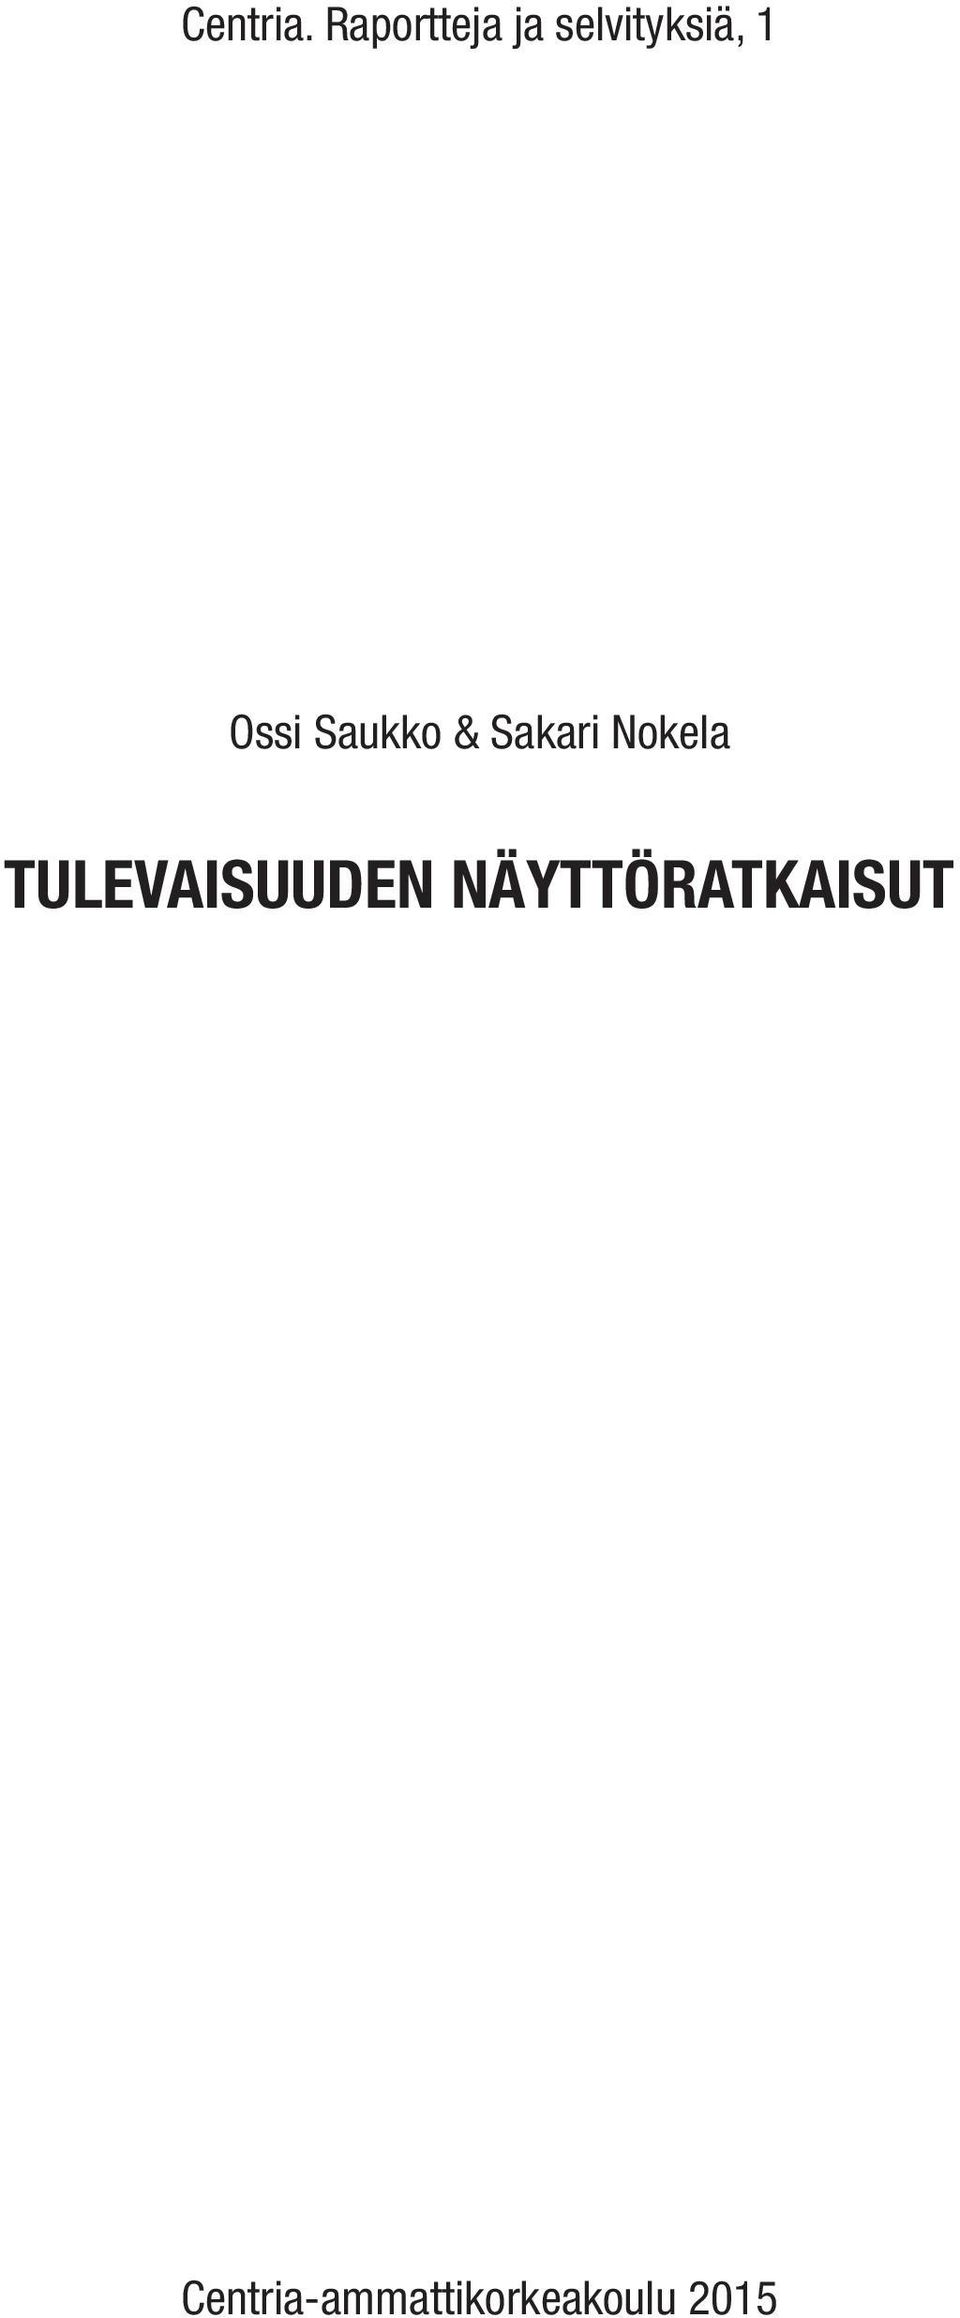 Ossi Saukko & Sakari Nokela